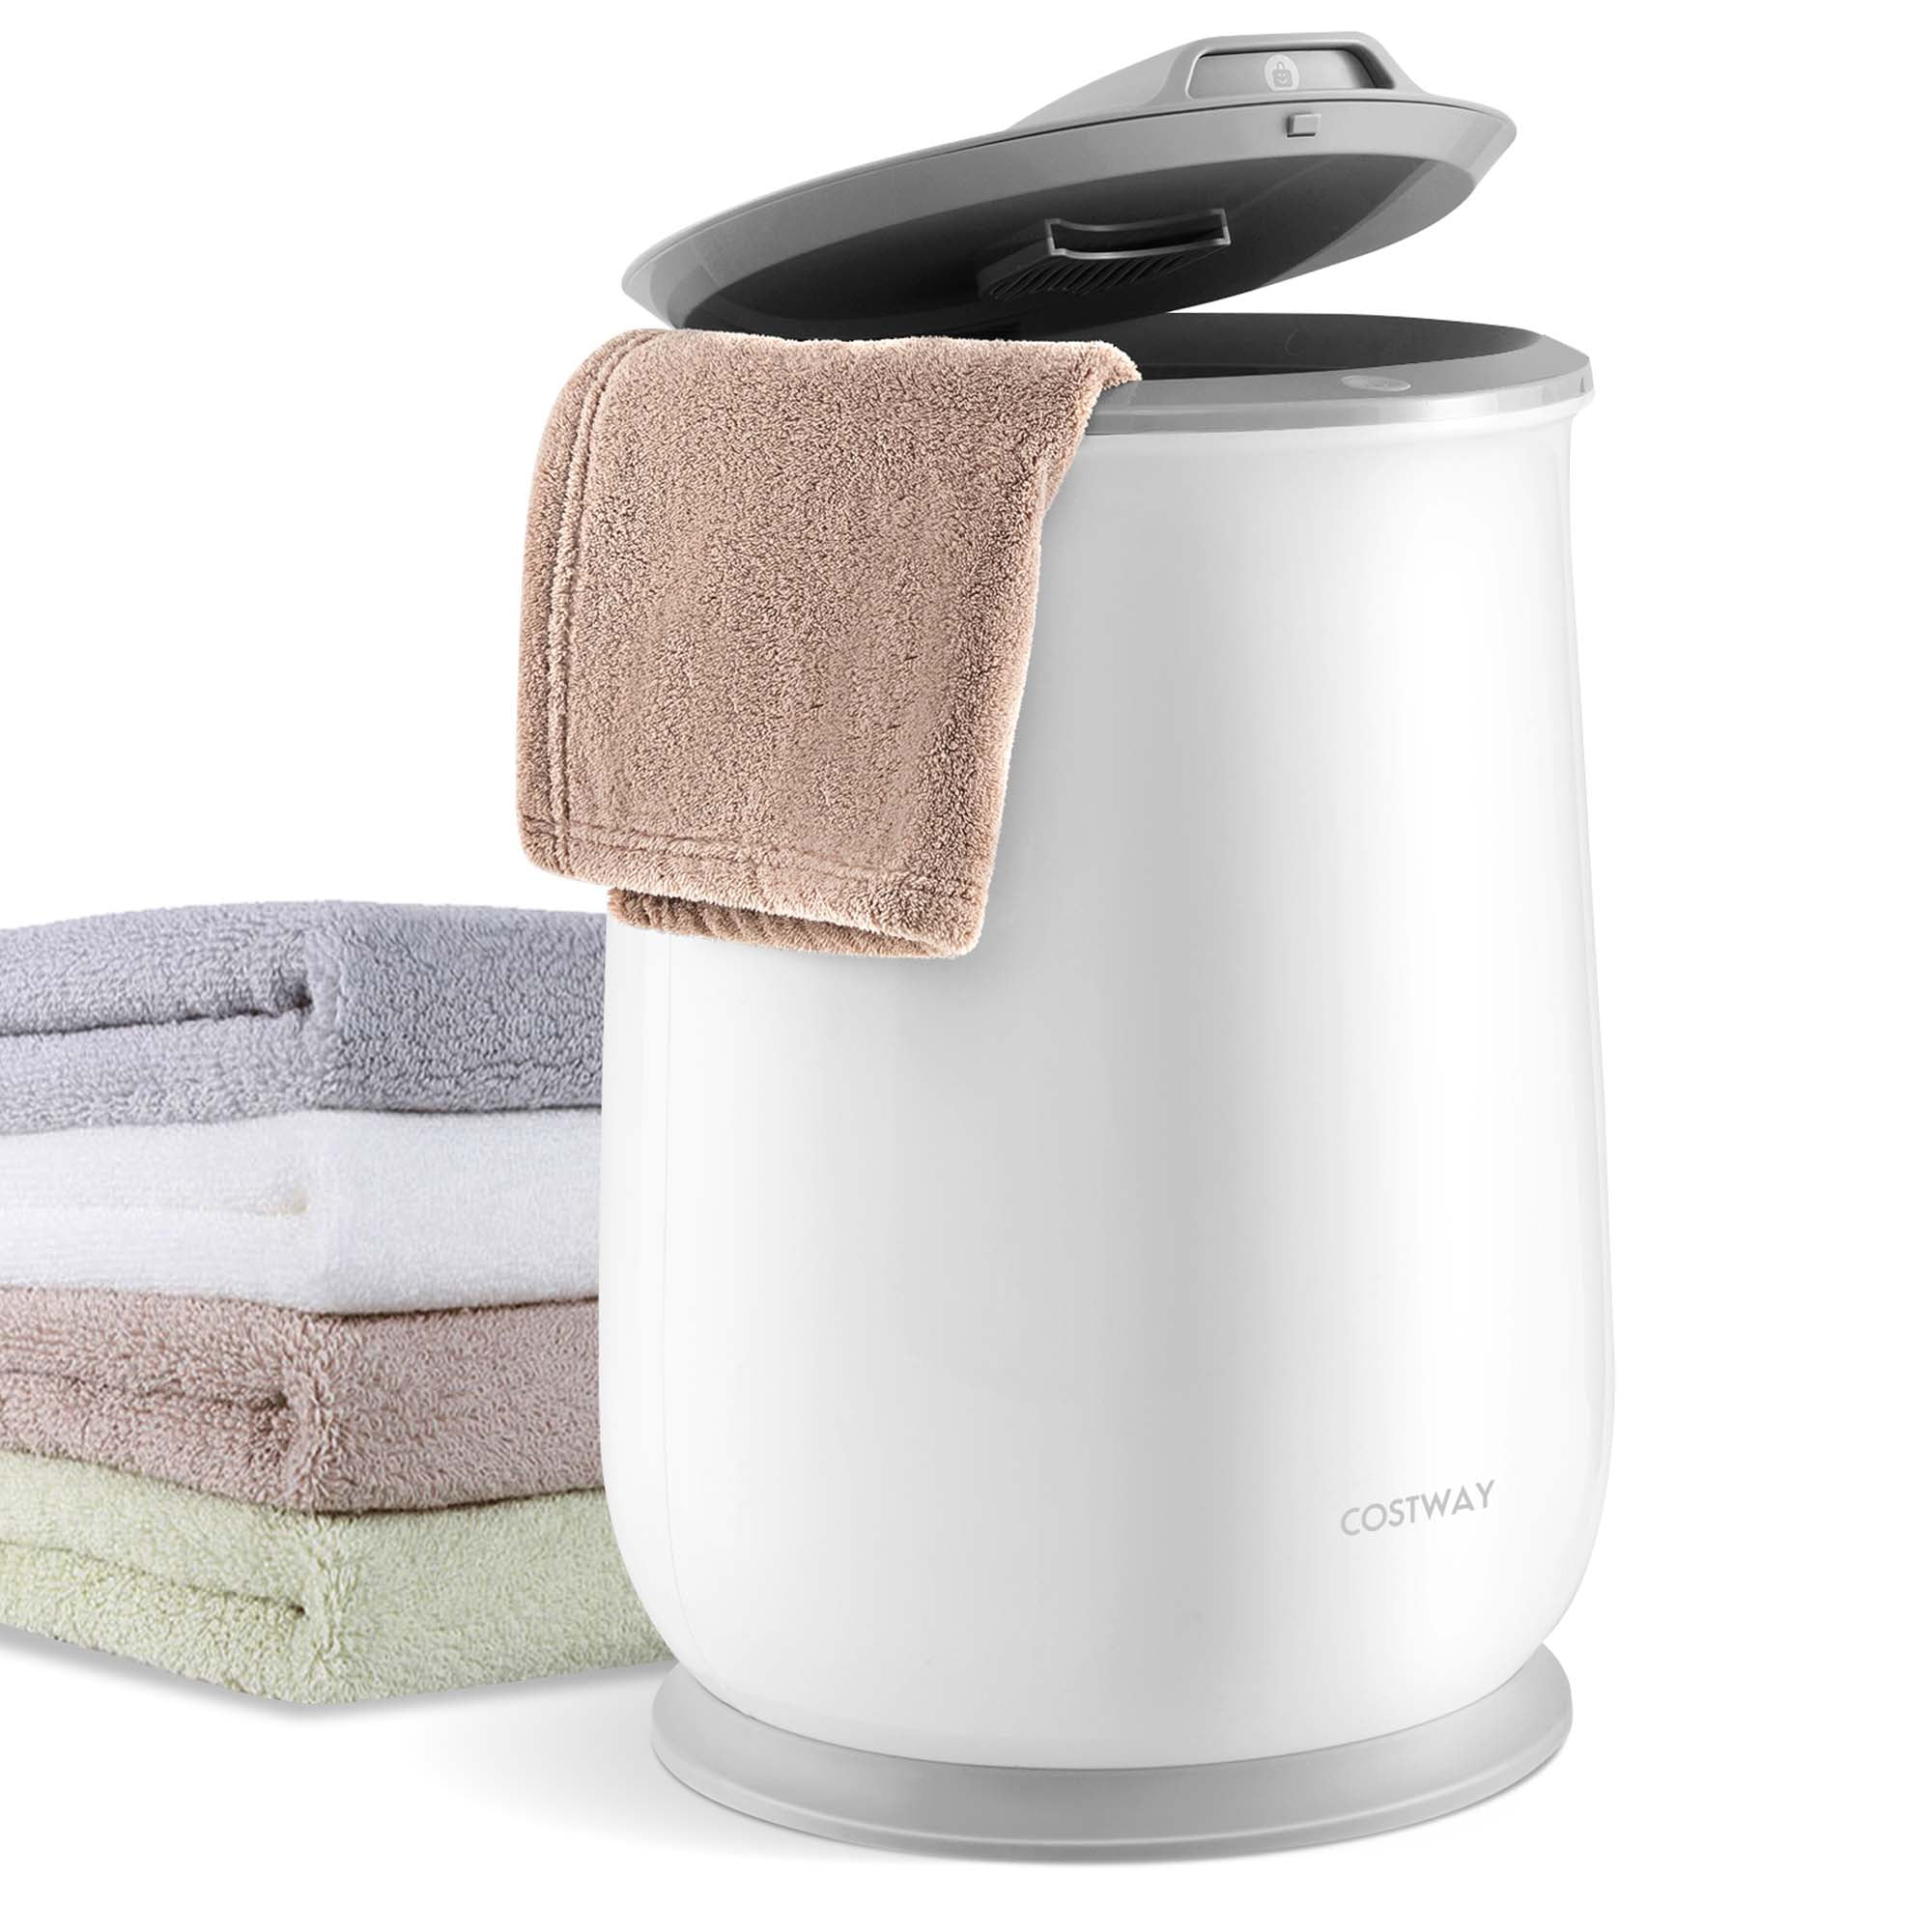  PalProt Towel Warmer Bucket Heater Bathroom Electric